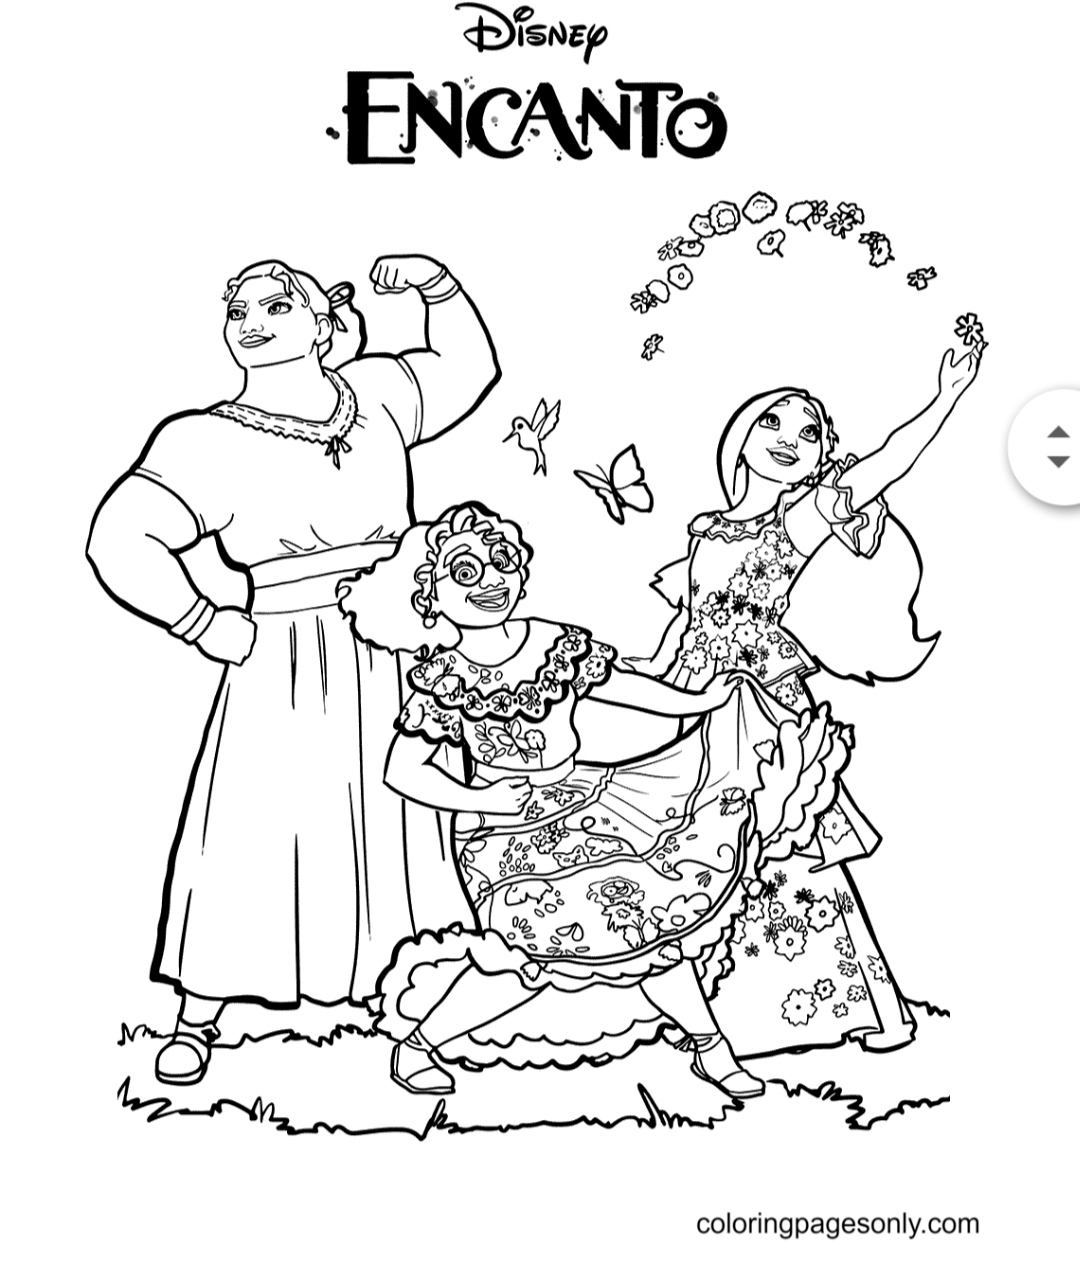 Printable Encanto coloring sheets | Printable Encanto coloring sheets